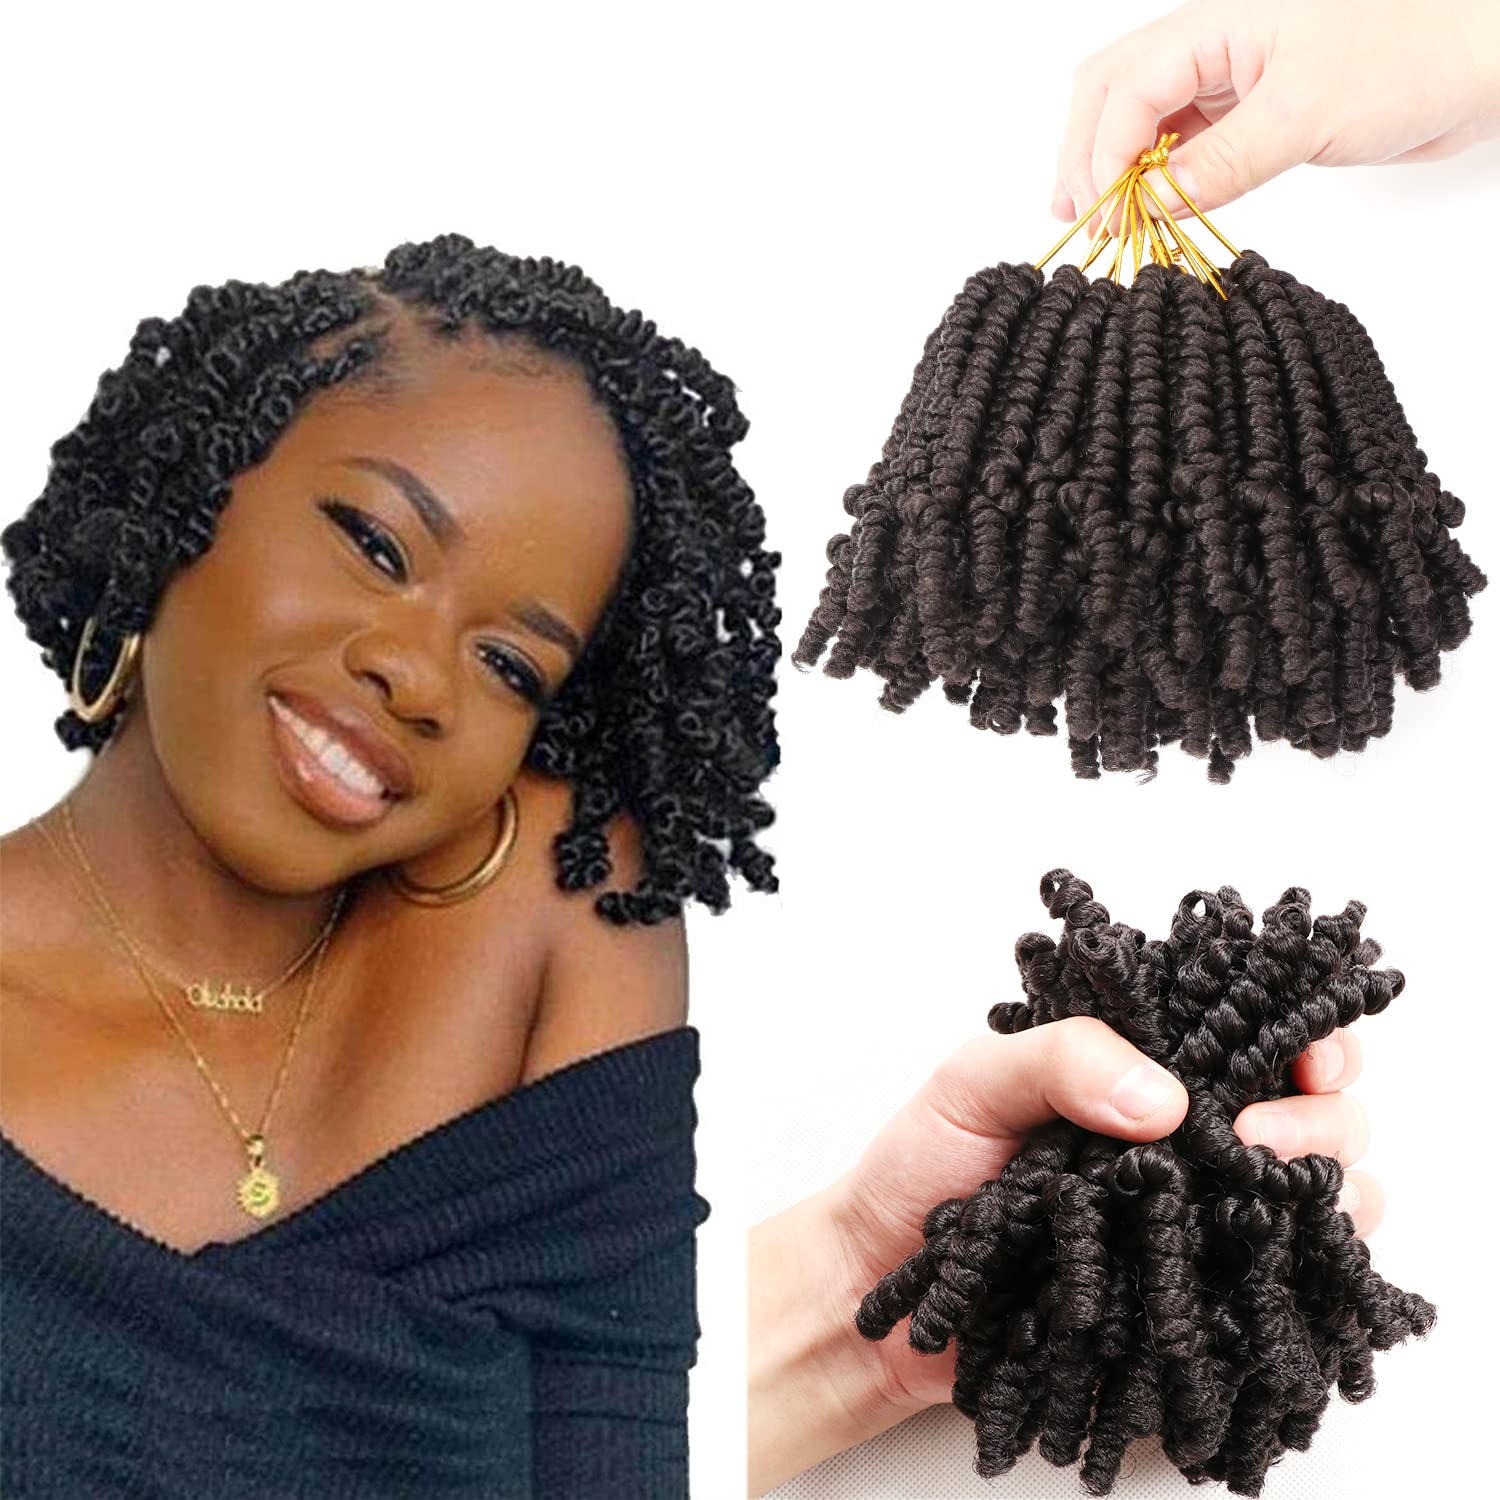 Lifabeauty 8 Packs Short Spring Twist Crochet Hair 4Inch Pretwisted Passion Twist  Crochet Hair Curly Pre Looped Crochet Braids Hair Bomb Twist Kids Crochet  Hair for Black Women (4 Inch, 2#) 4 Inch 2#